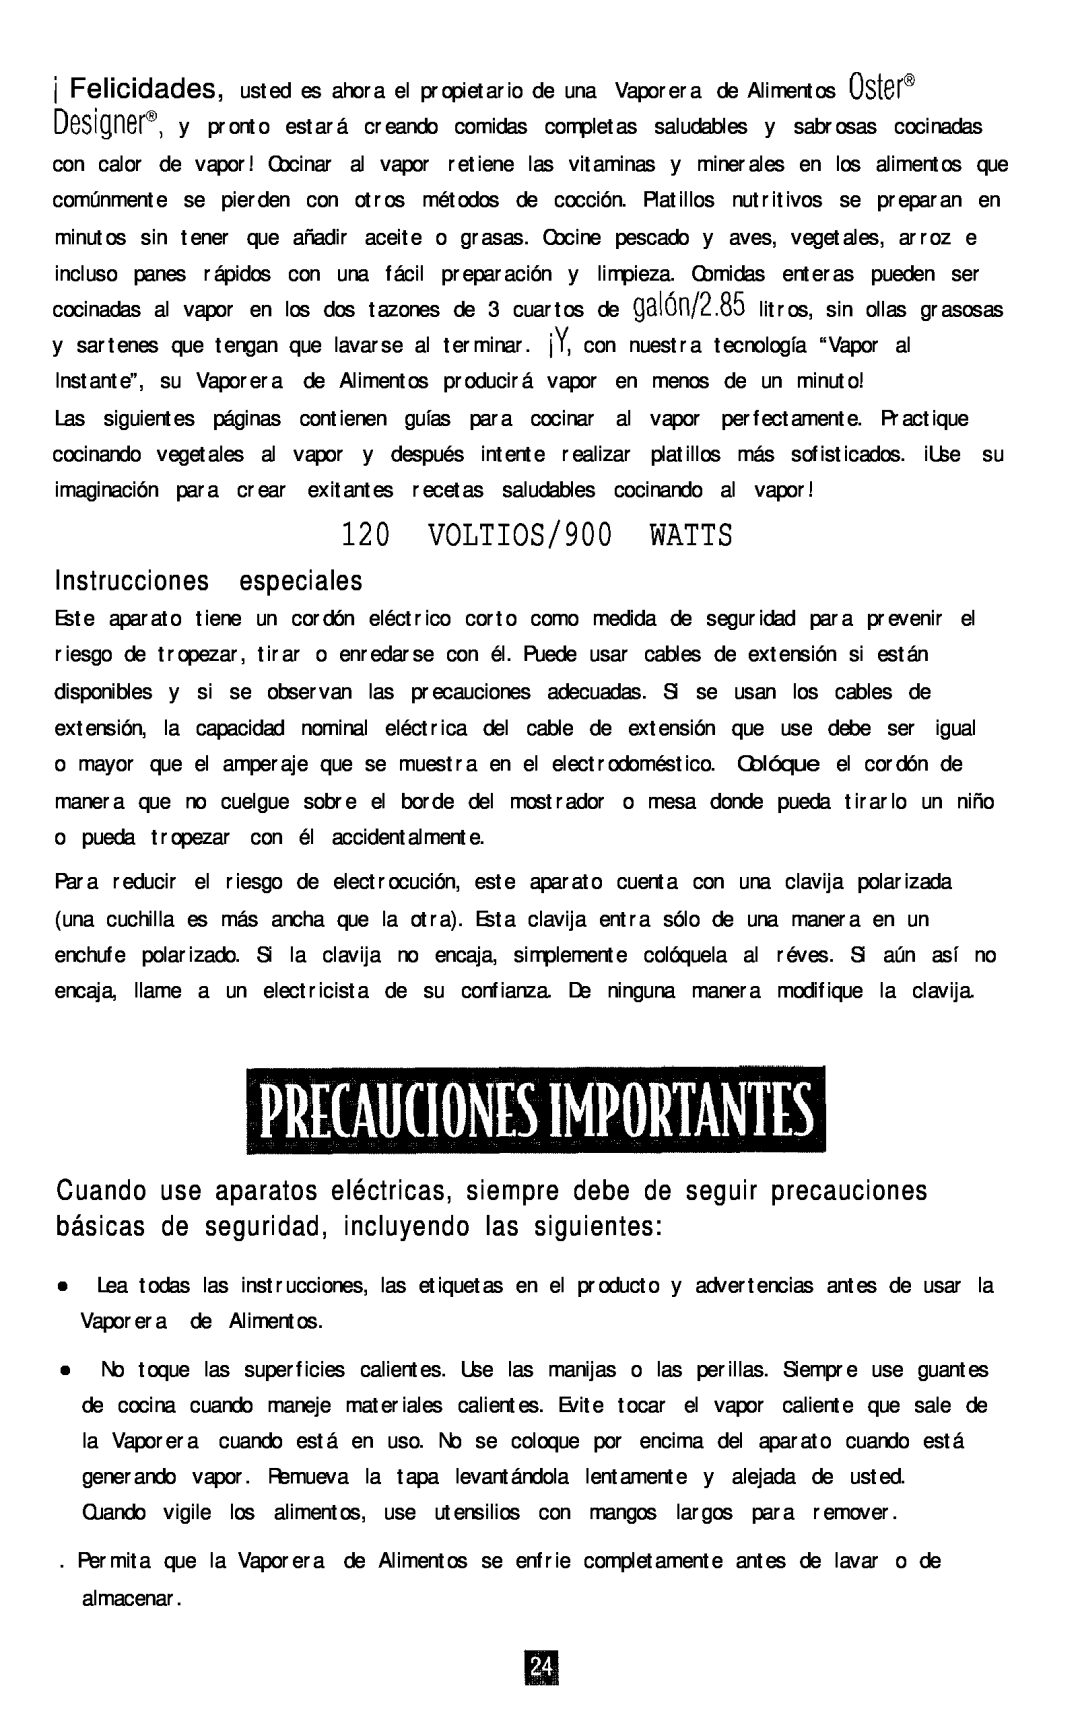 Oster 4711 manual VOLTIOS/900 WATTS, Instrucciones especiales 